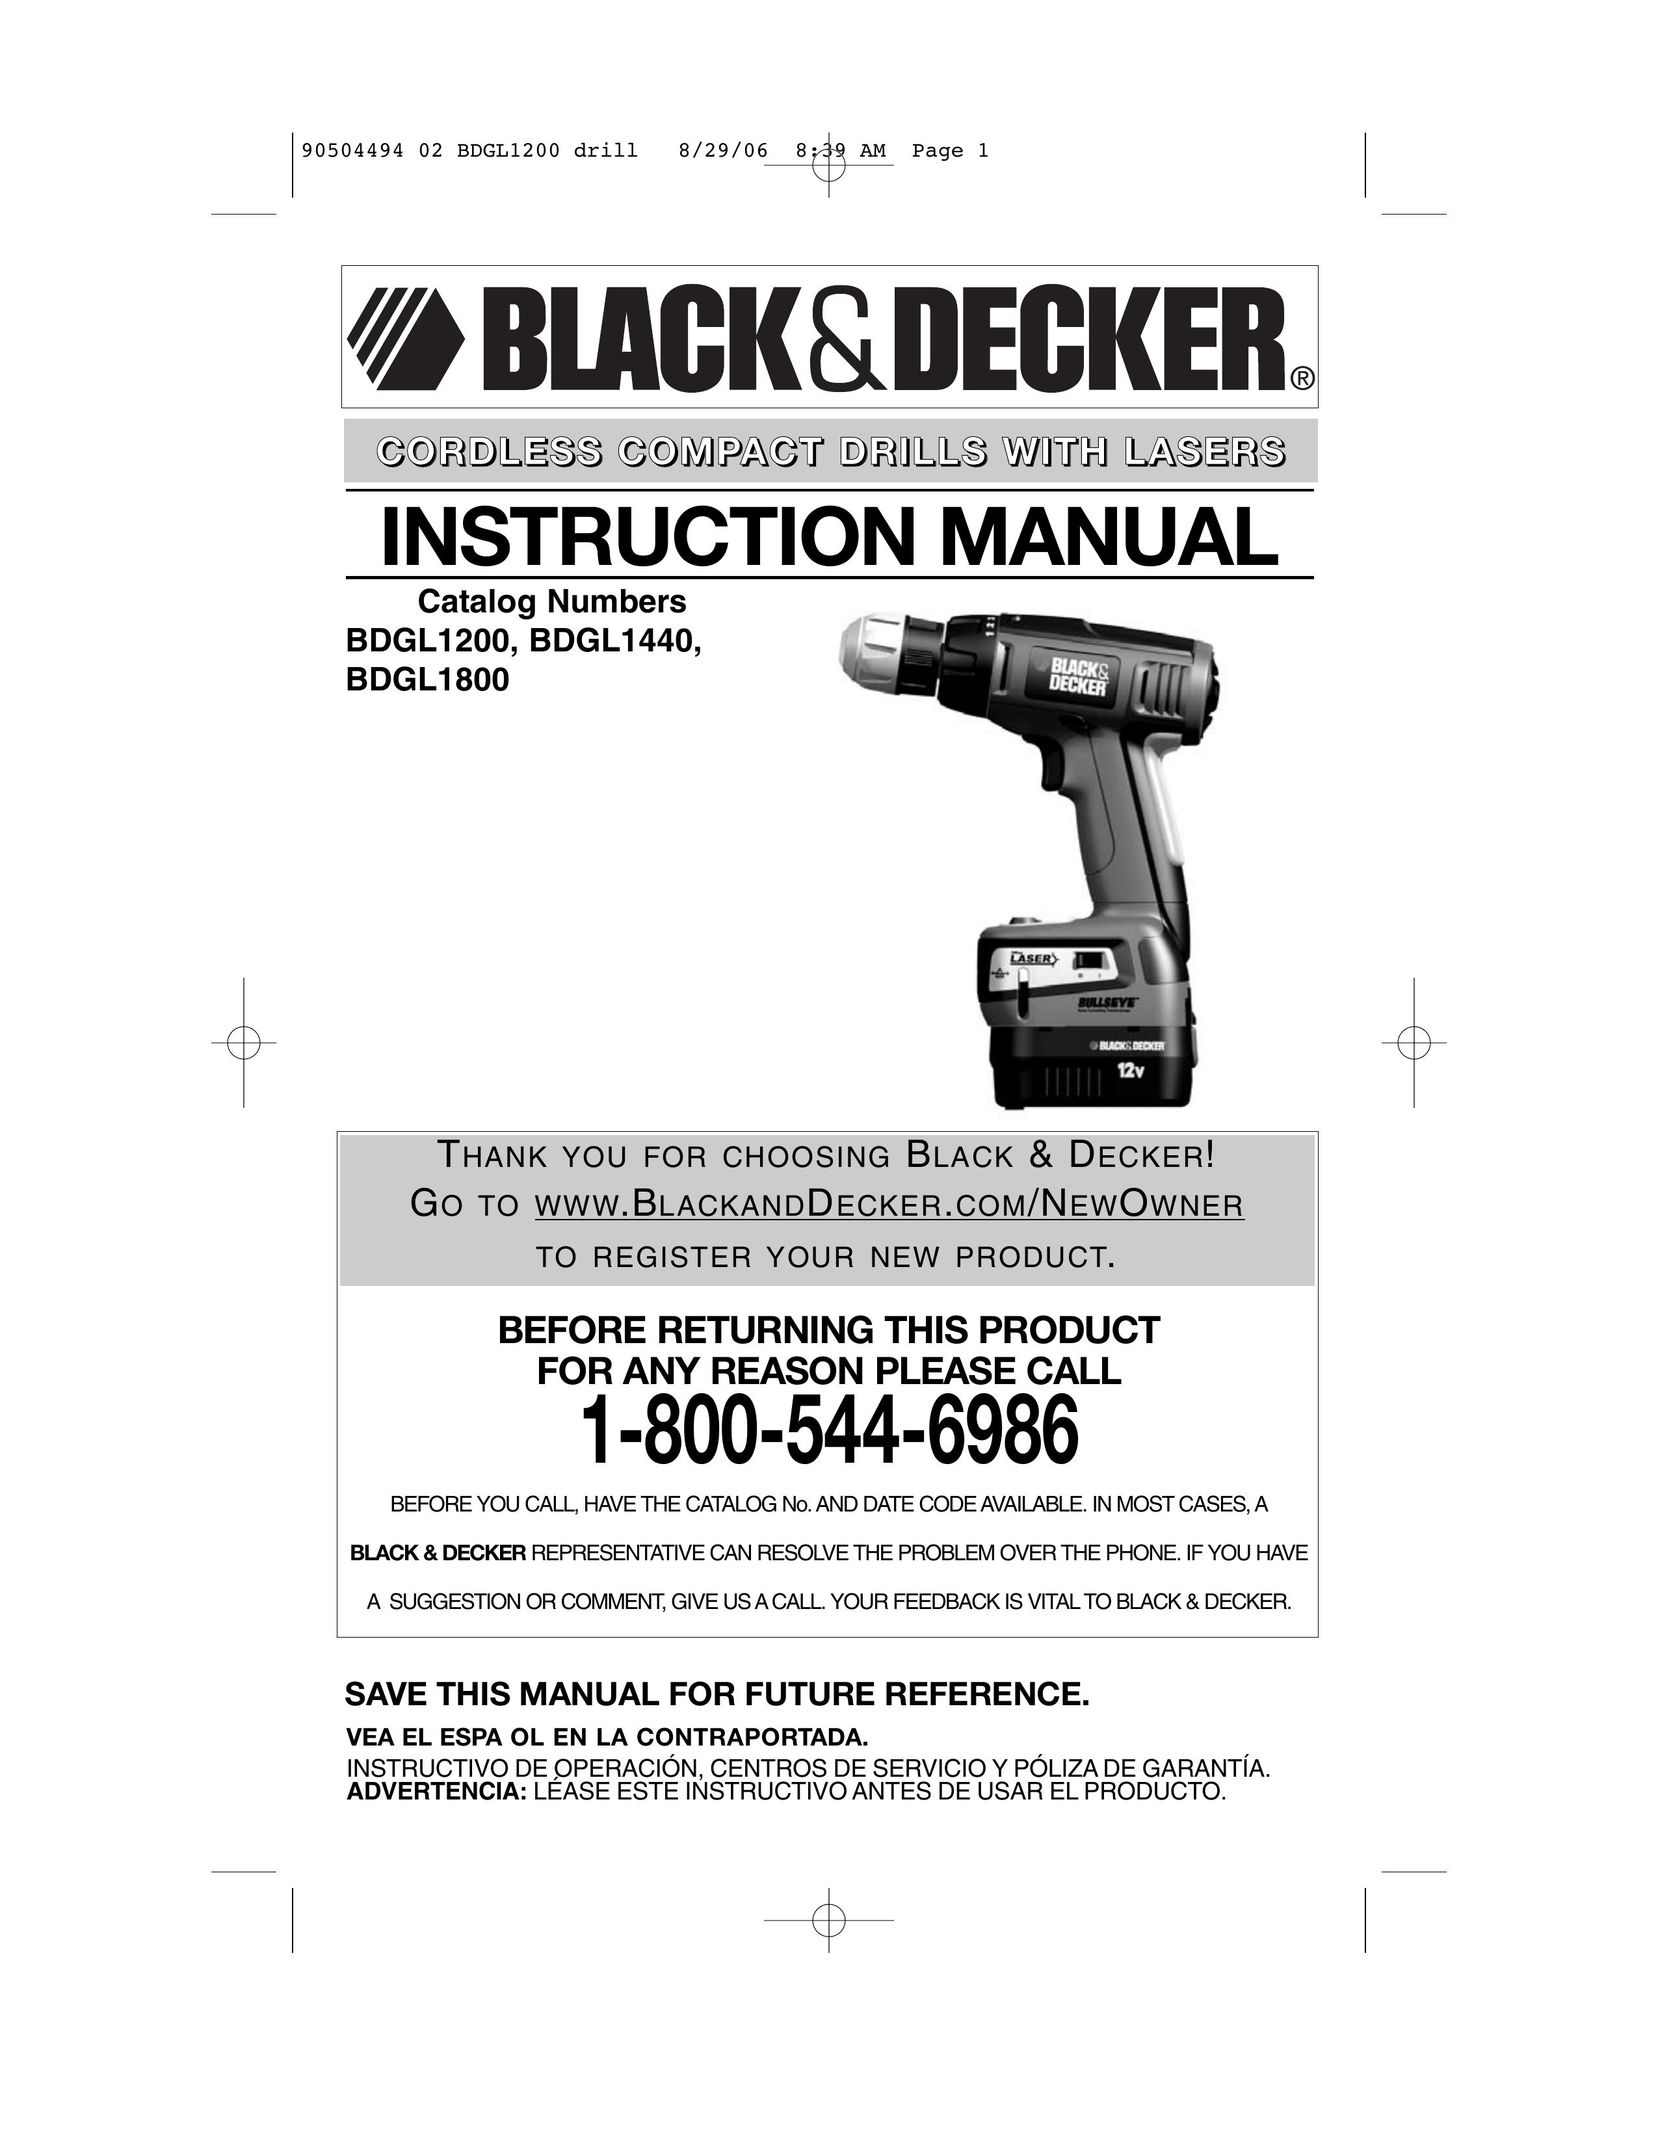 Black & Decker 90504494 Cordless Drill User Manual